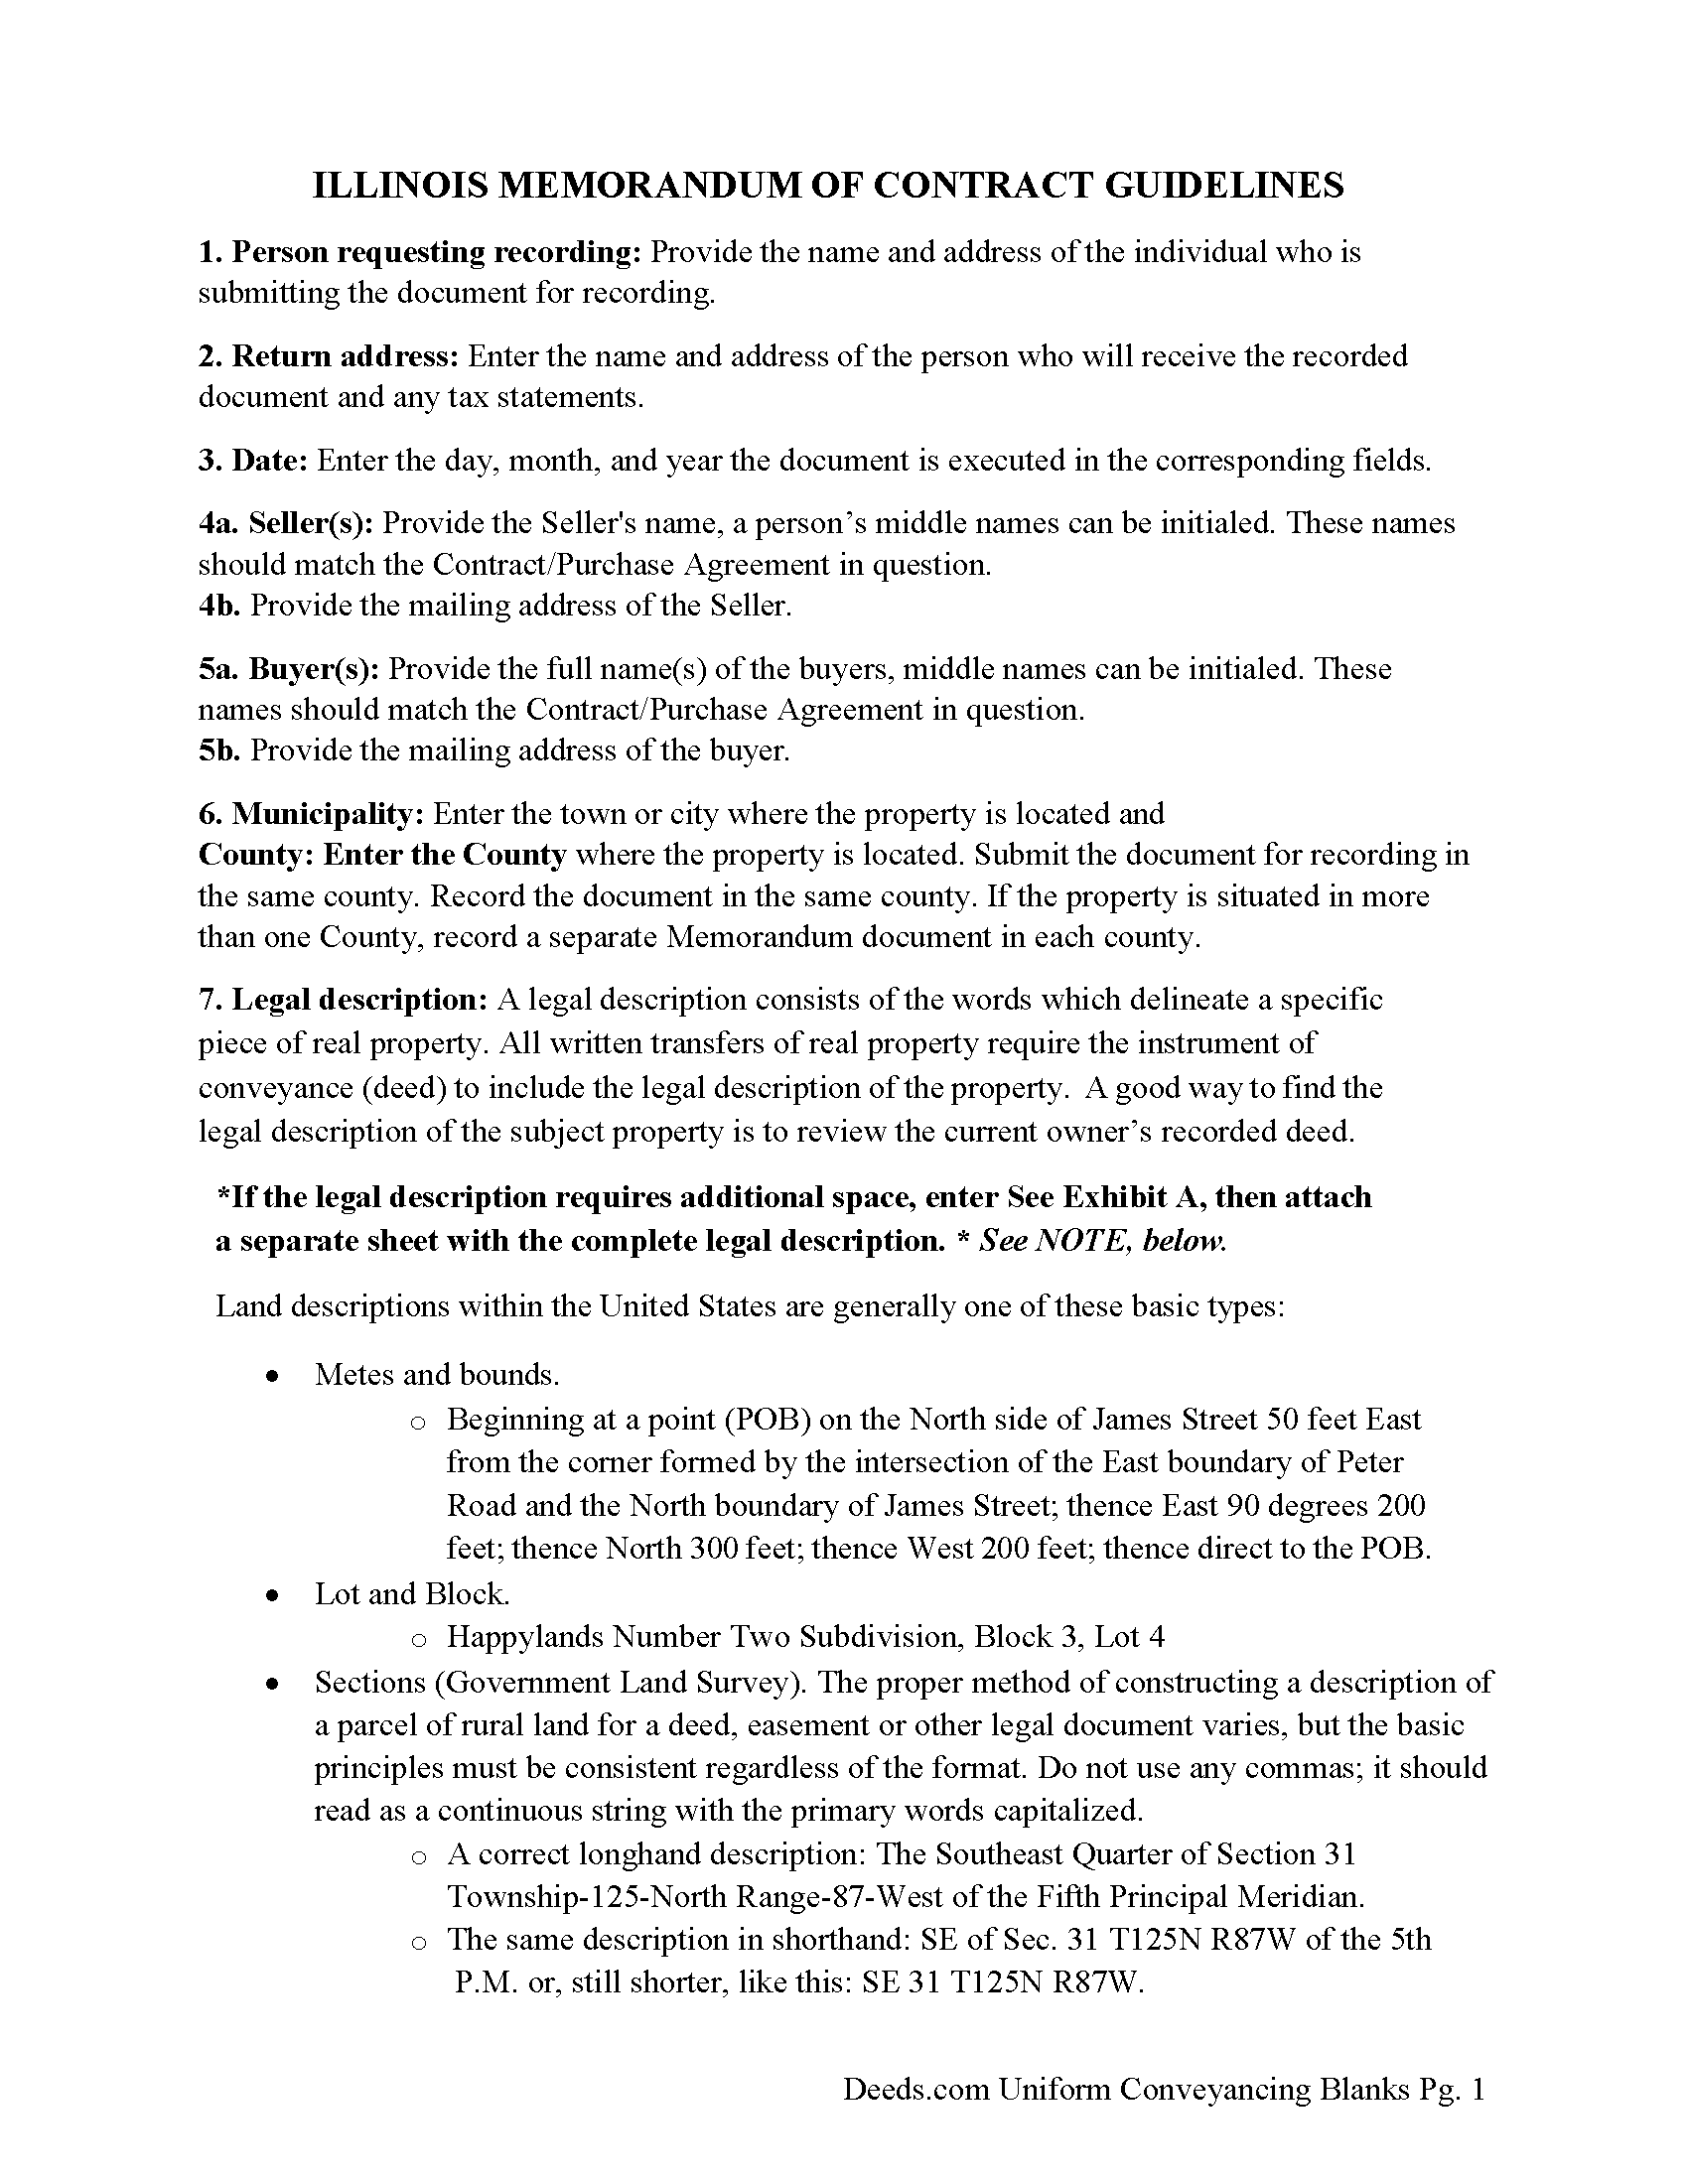 Iroquois County Memorandum of an Installment Sales Contract Guide